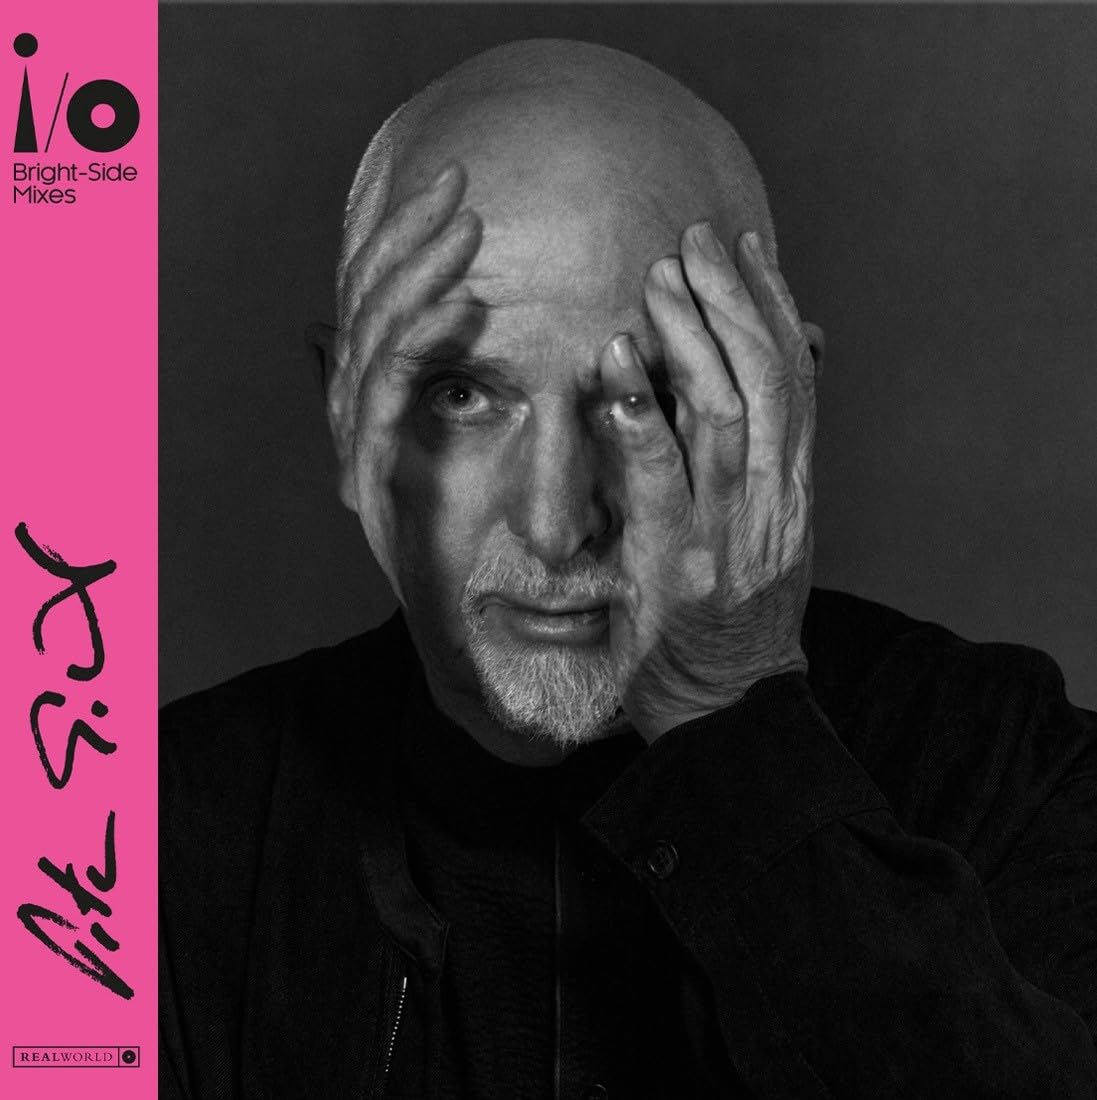 Peter Gabriel: i/o Bright-Side Mix (Double Vinyl) - $34